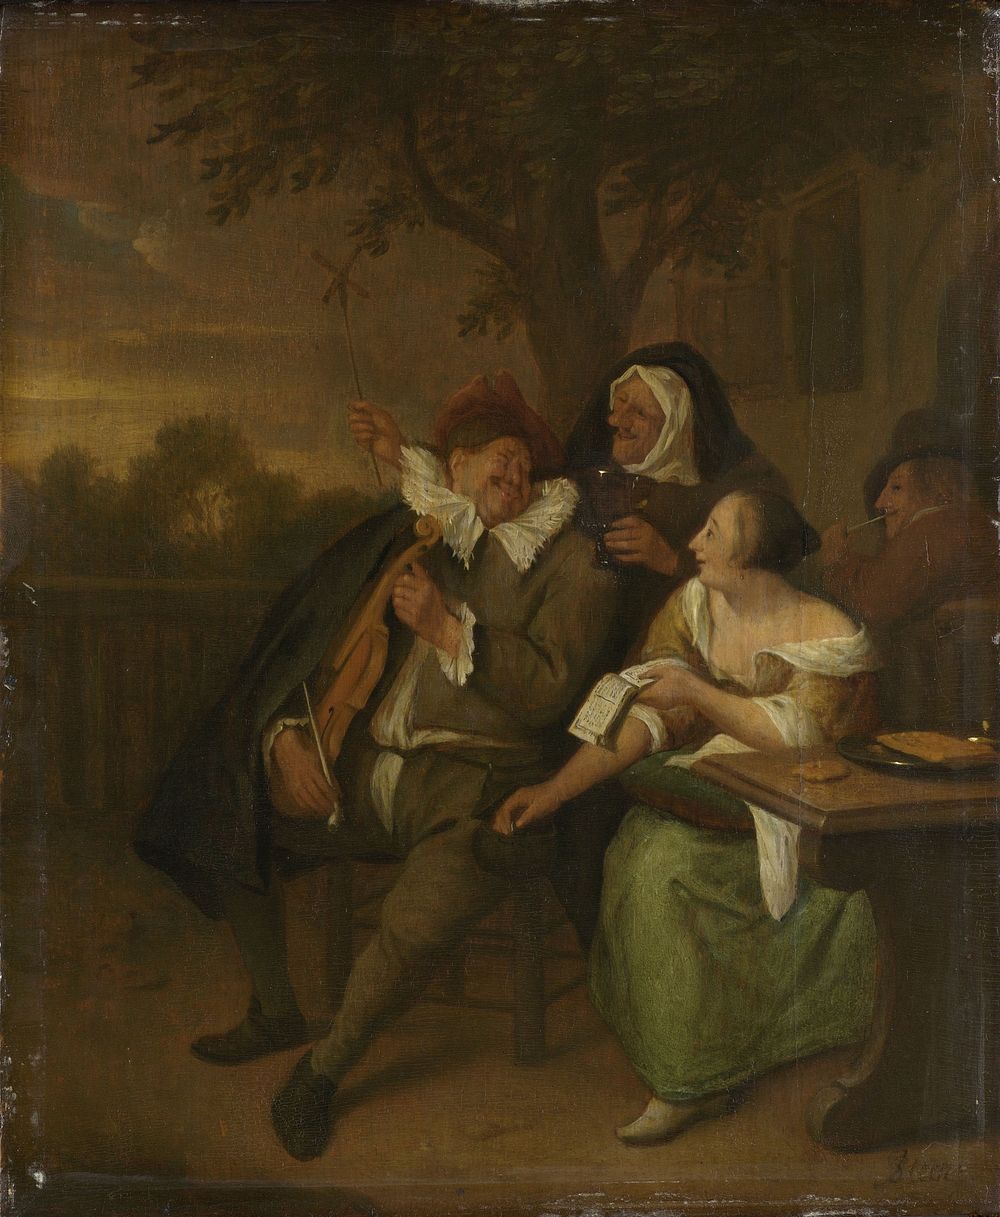 Man with a fiddle in bad company (1670 - 1700) by Jan Havicksz Steen